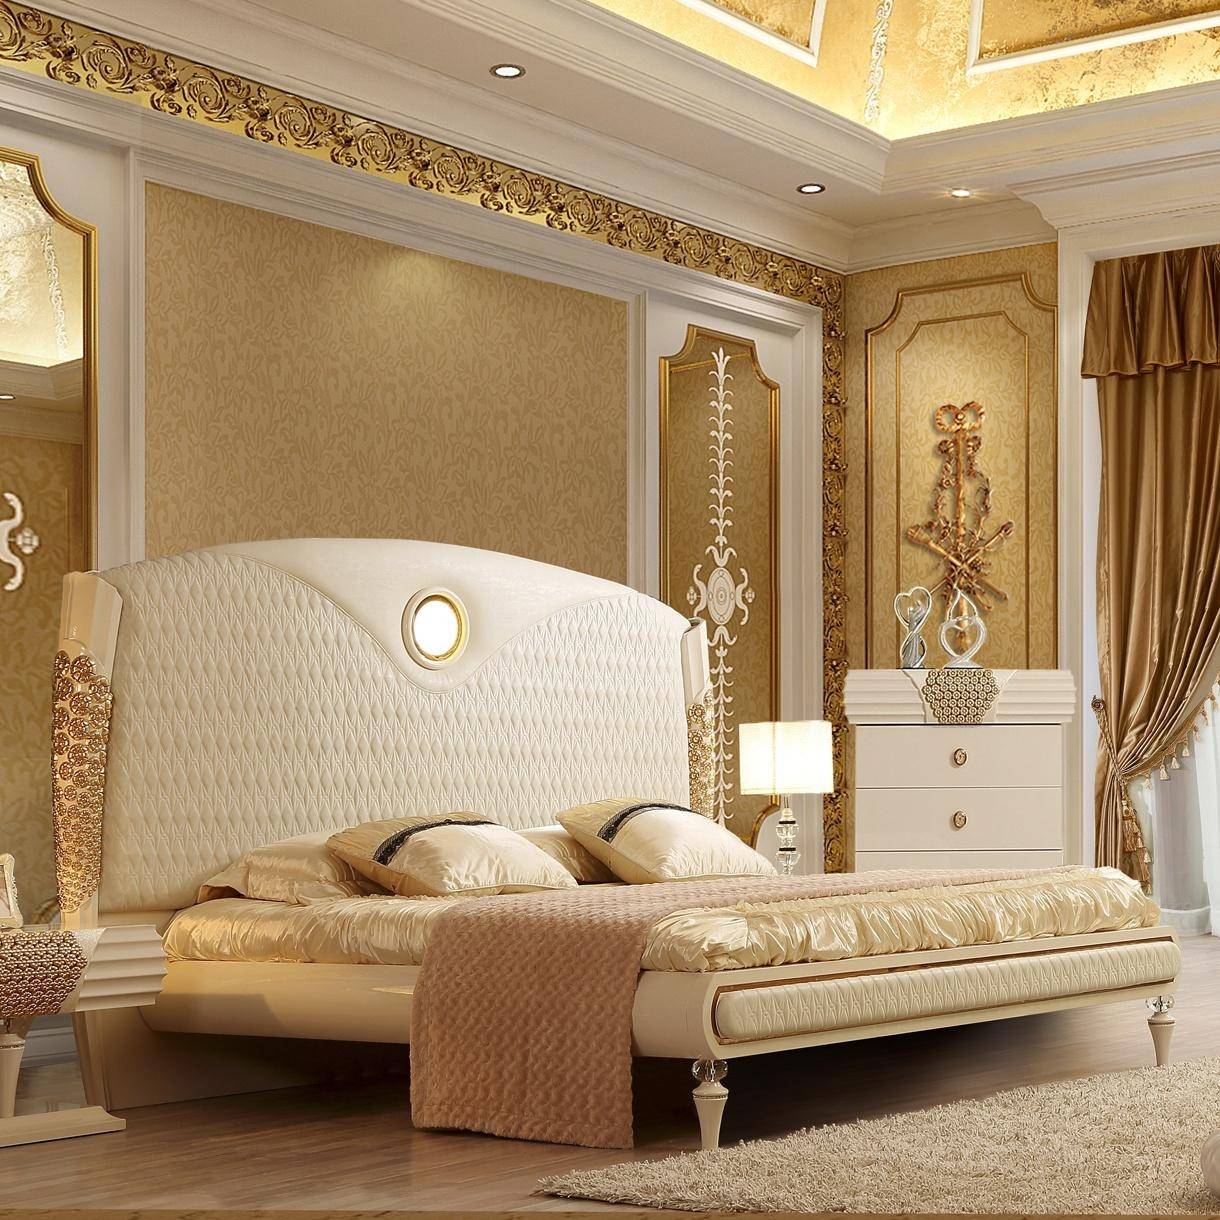 Homey Design Hd 901 King Sleigh Bed, Cream Leather Headboard King Size